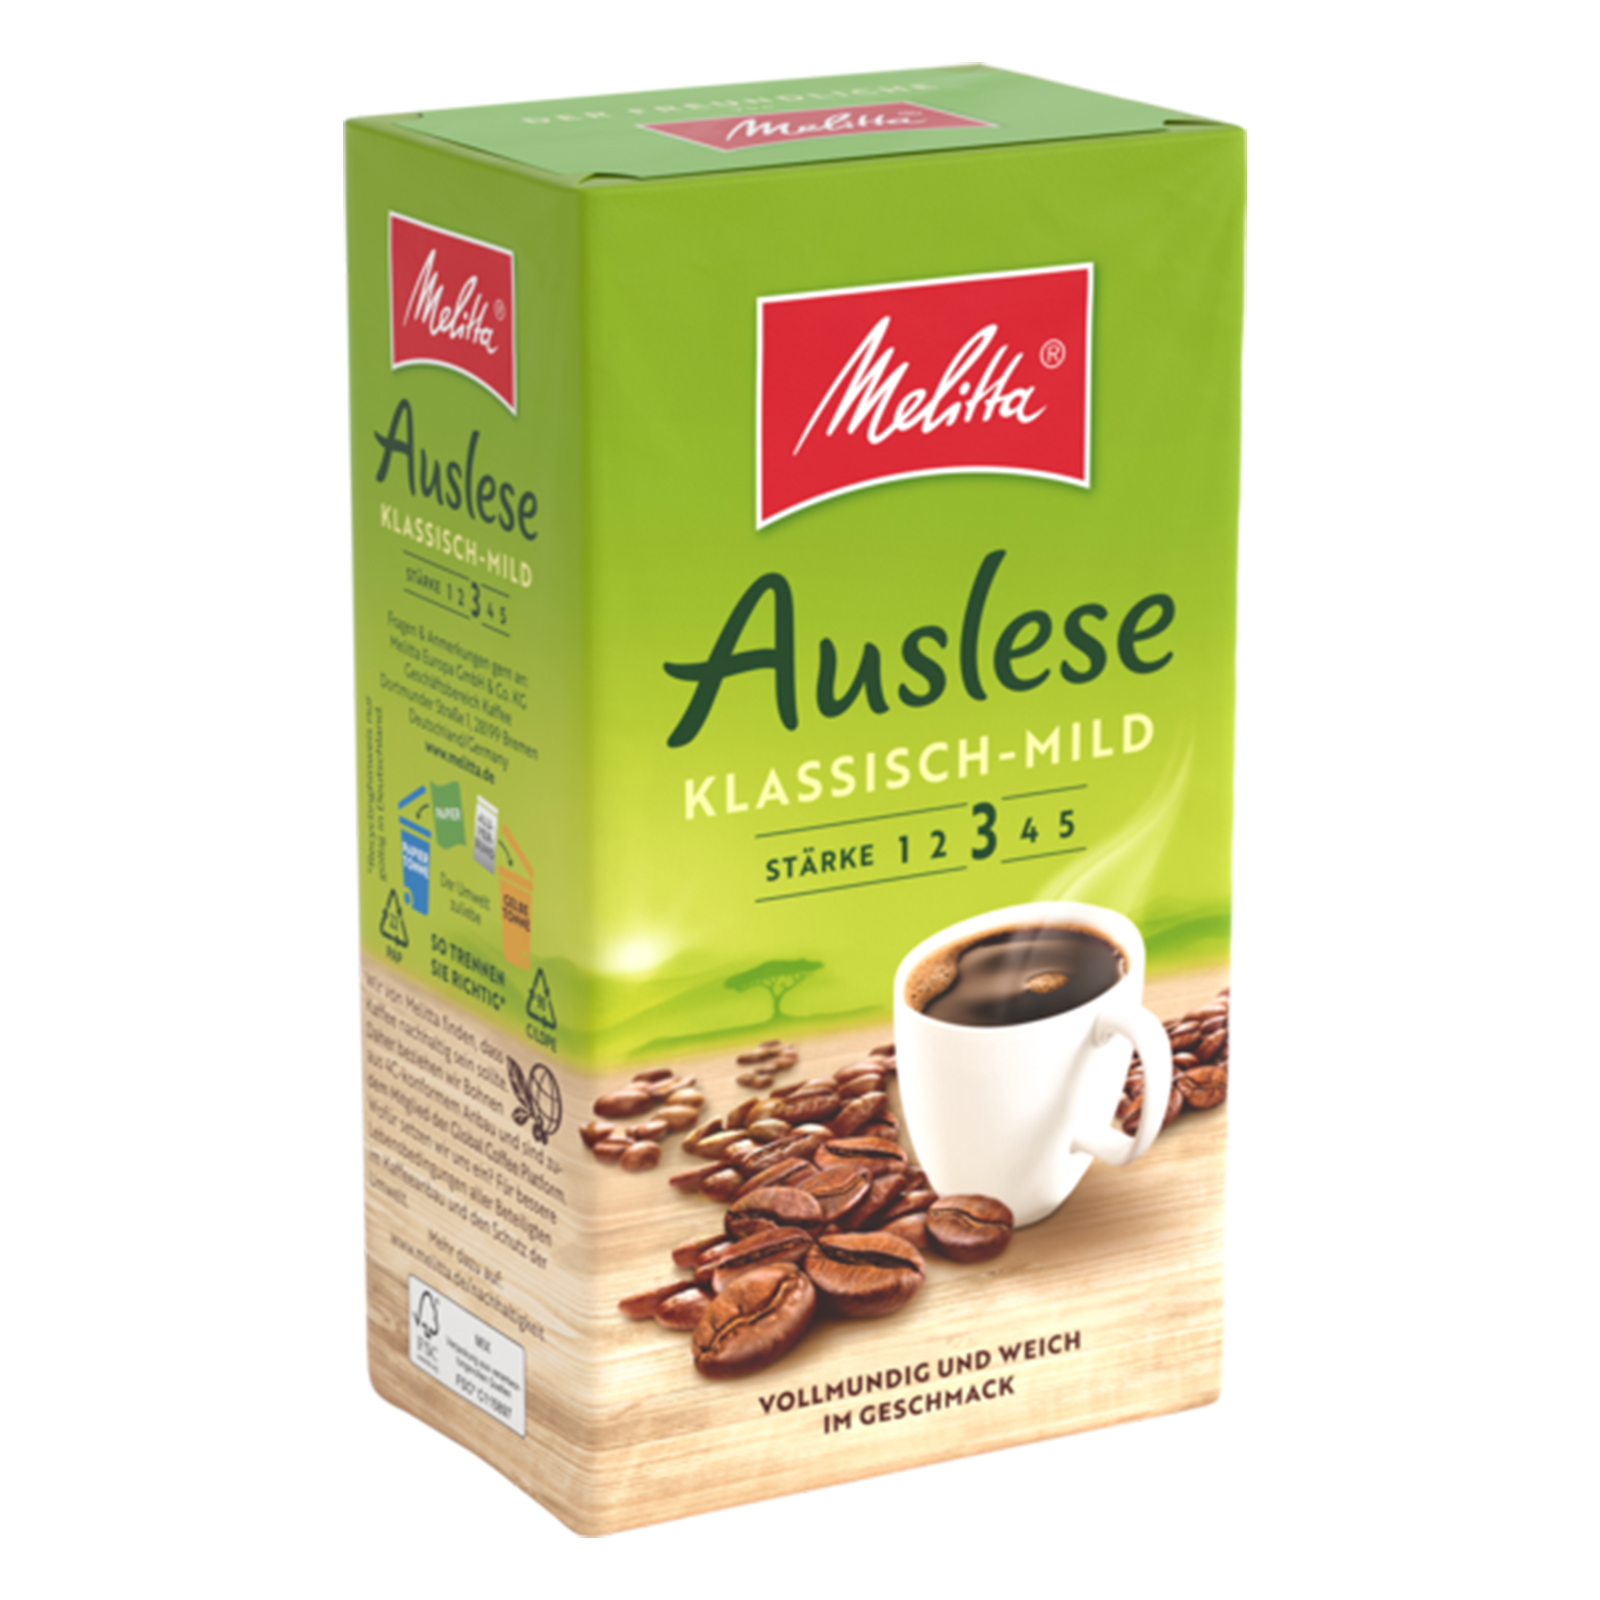 Röstkaffee g 500 Auslese MELITTA Klassisch-mild gemahlener